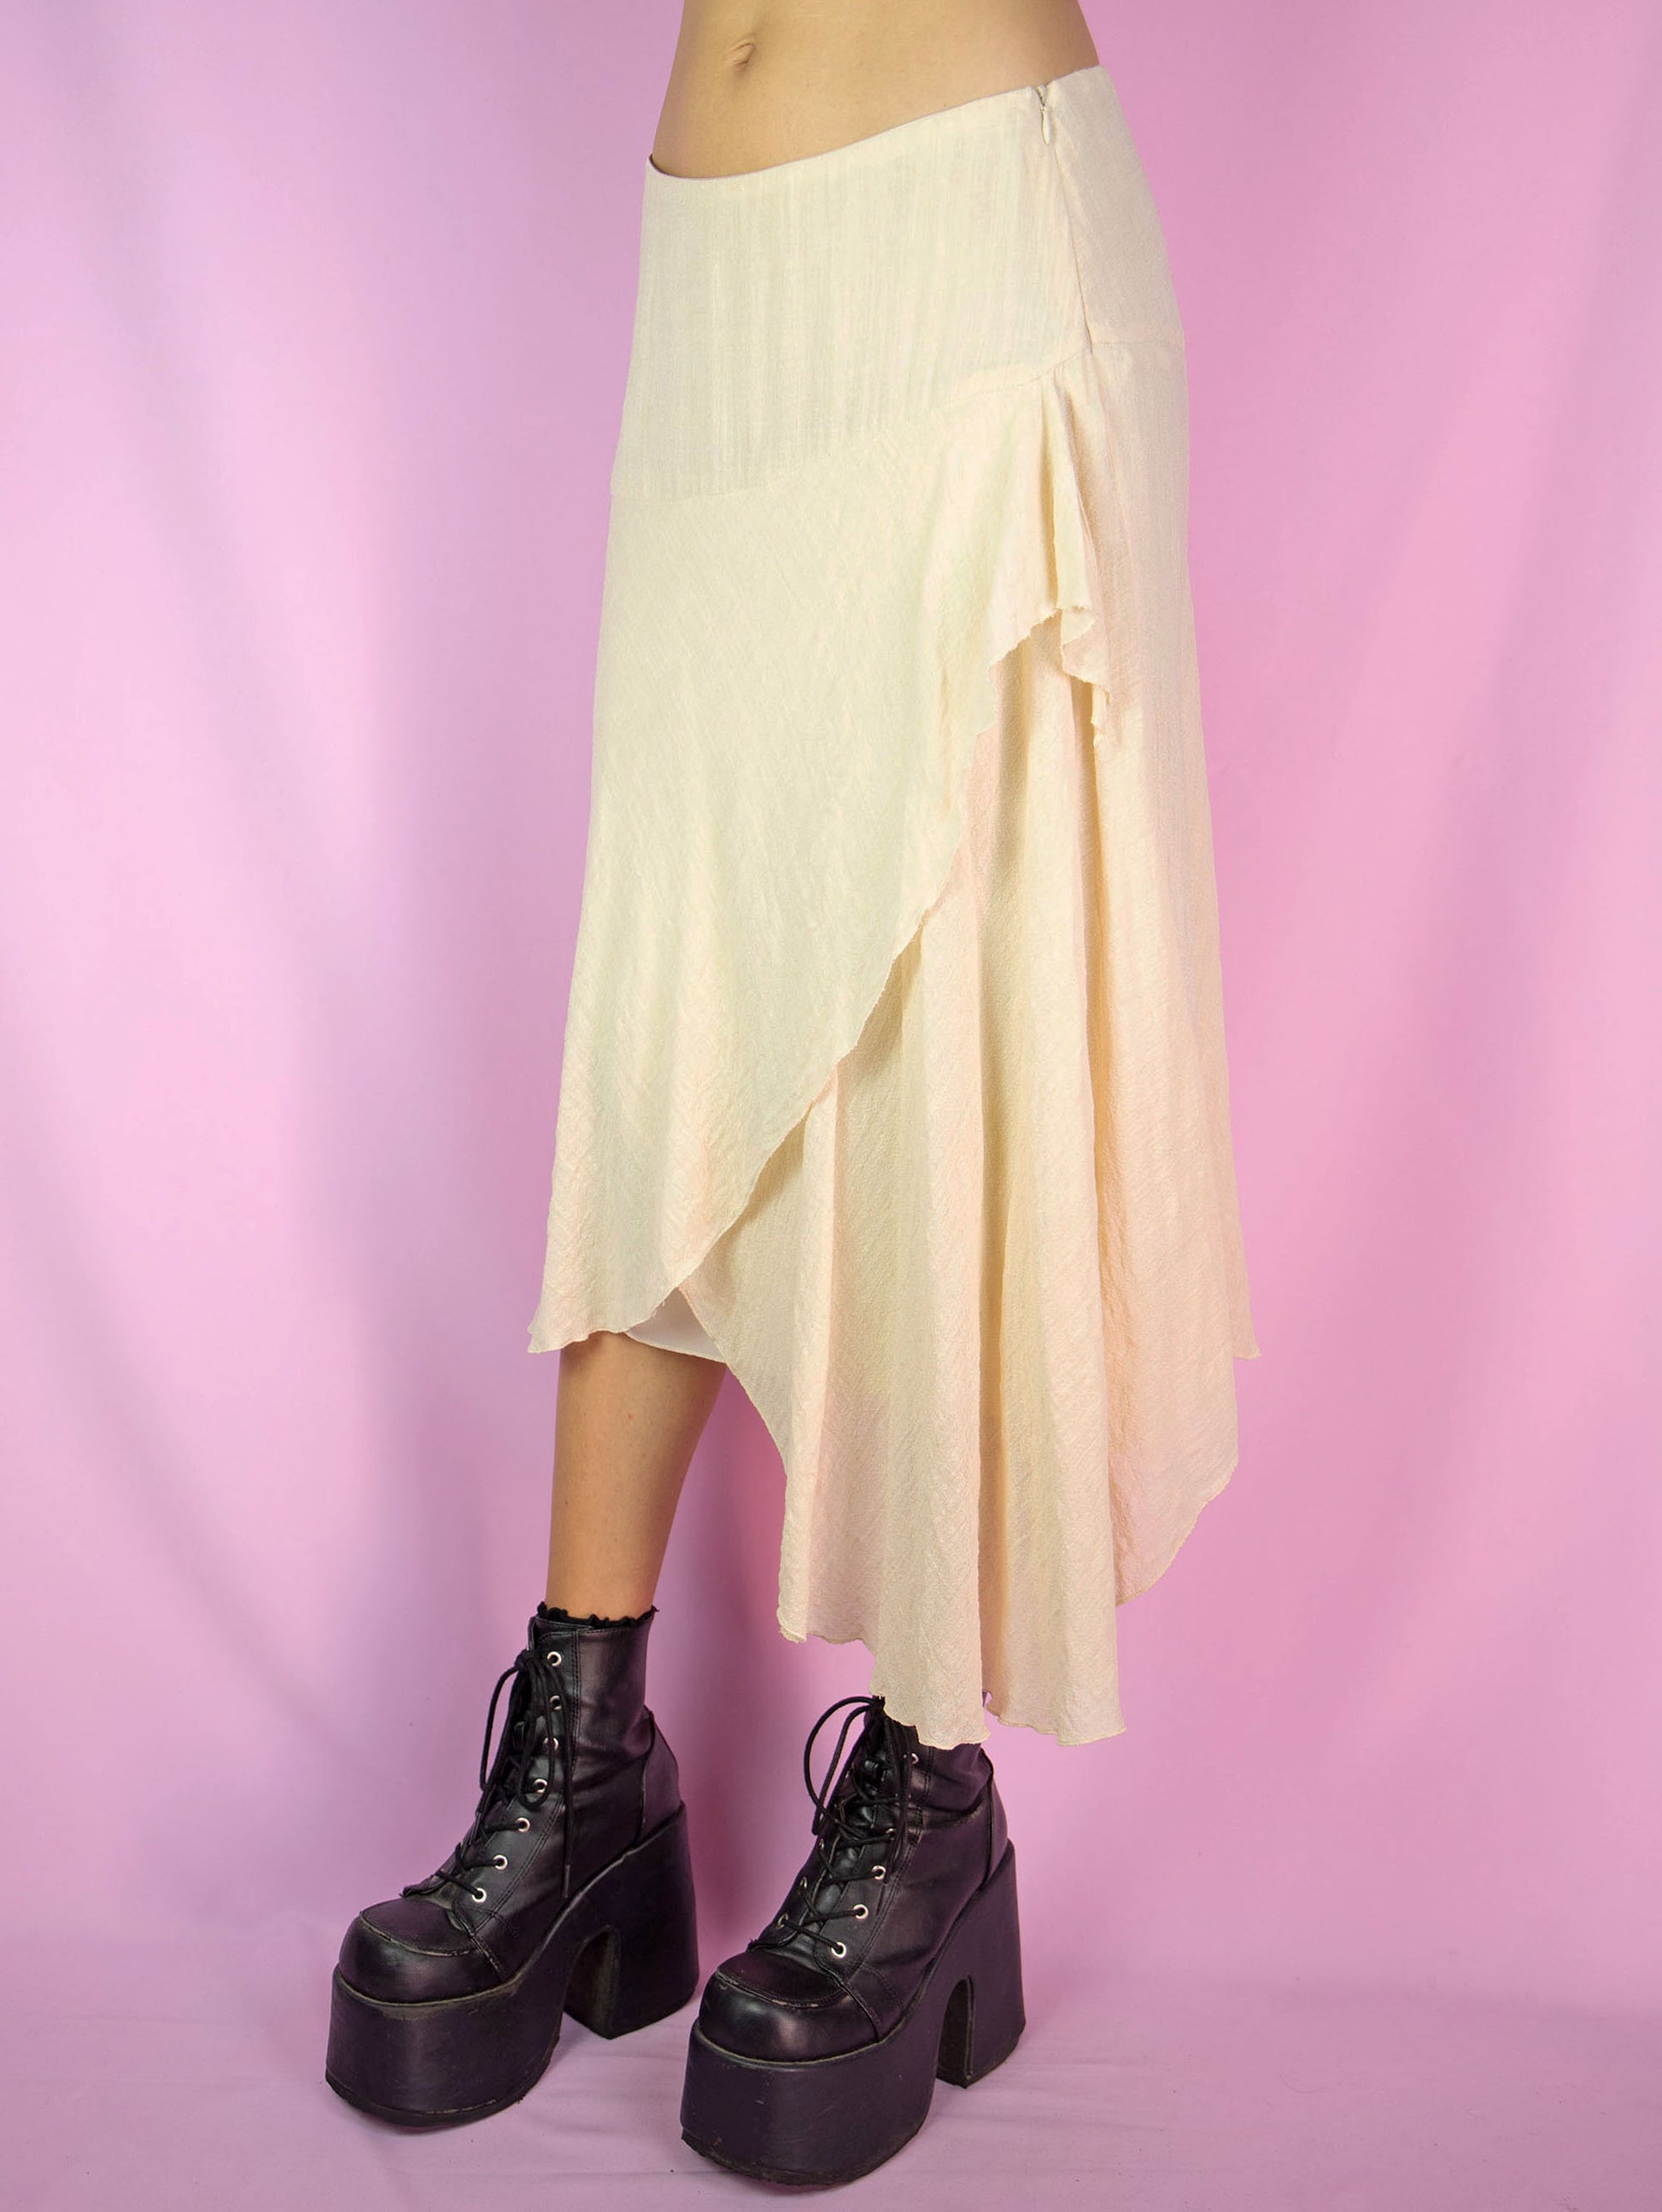 The Vintage 90s Beige Asymmetric Layered Skirt is a cream beige tiered layered skirt with an asymmetrical hem and a side zipper closure. Boho fairy grunge 1990s avant garde midi skirt.